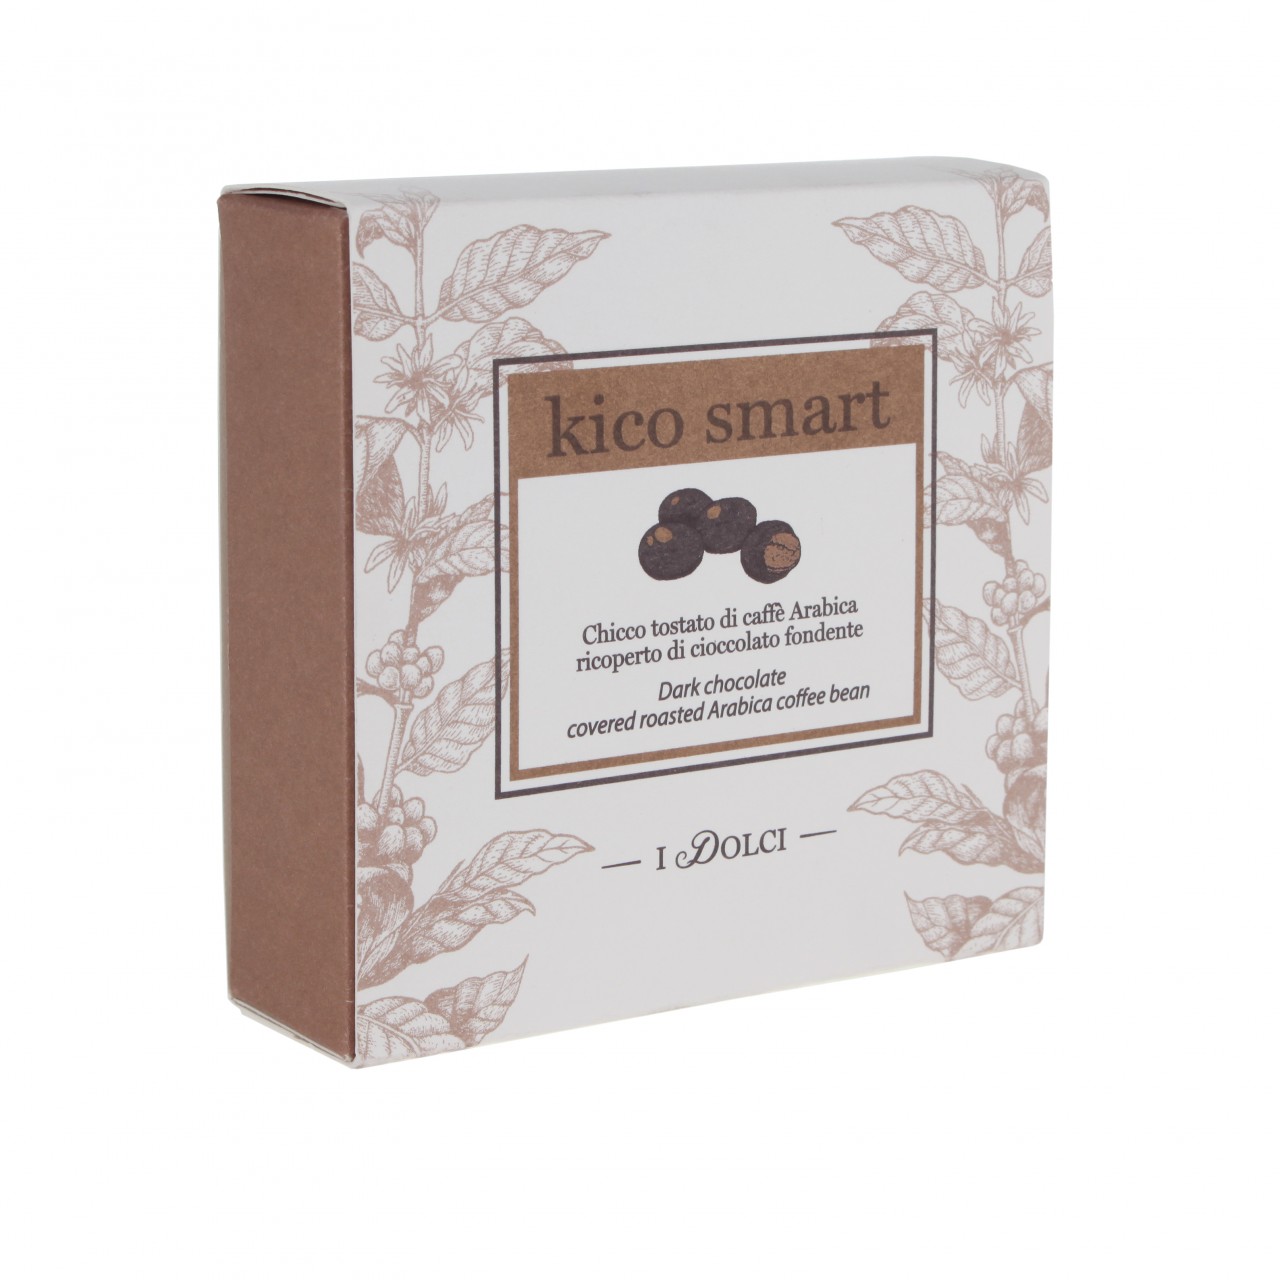 Diemme Kico Smart Chocolate Beans